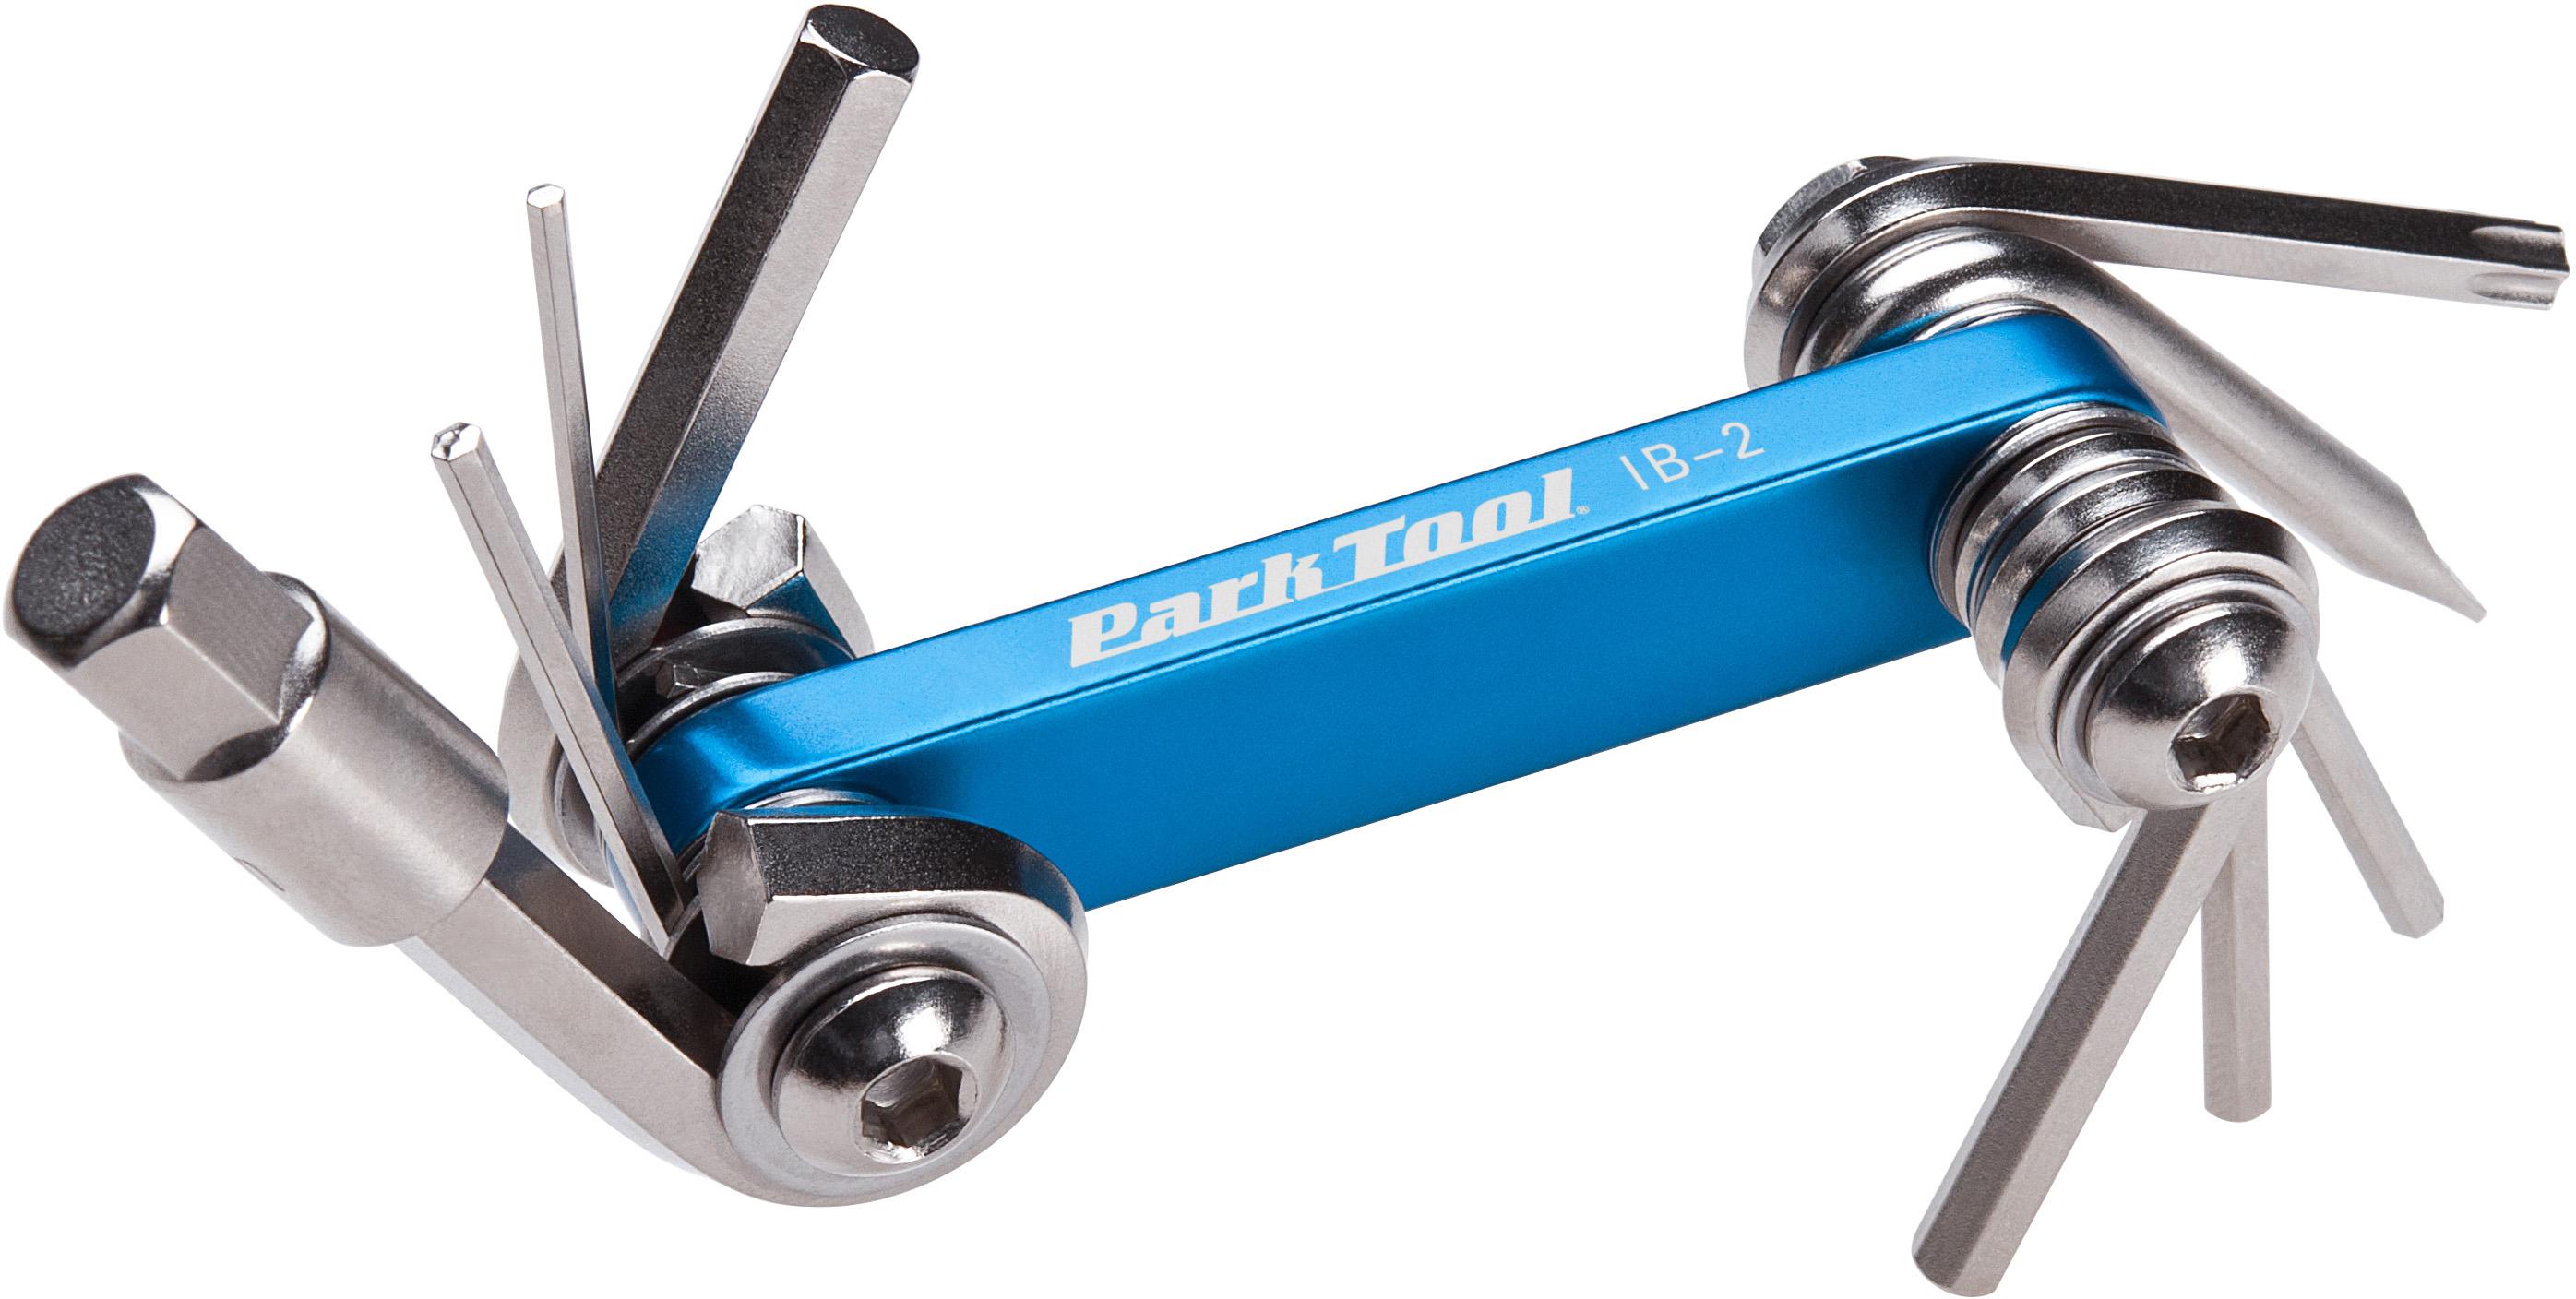 Park Tool I-beam Multi-tool (ib-2)  Blue/silver